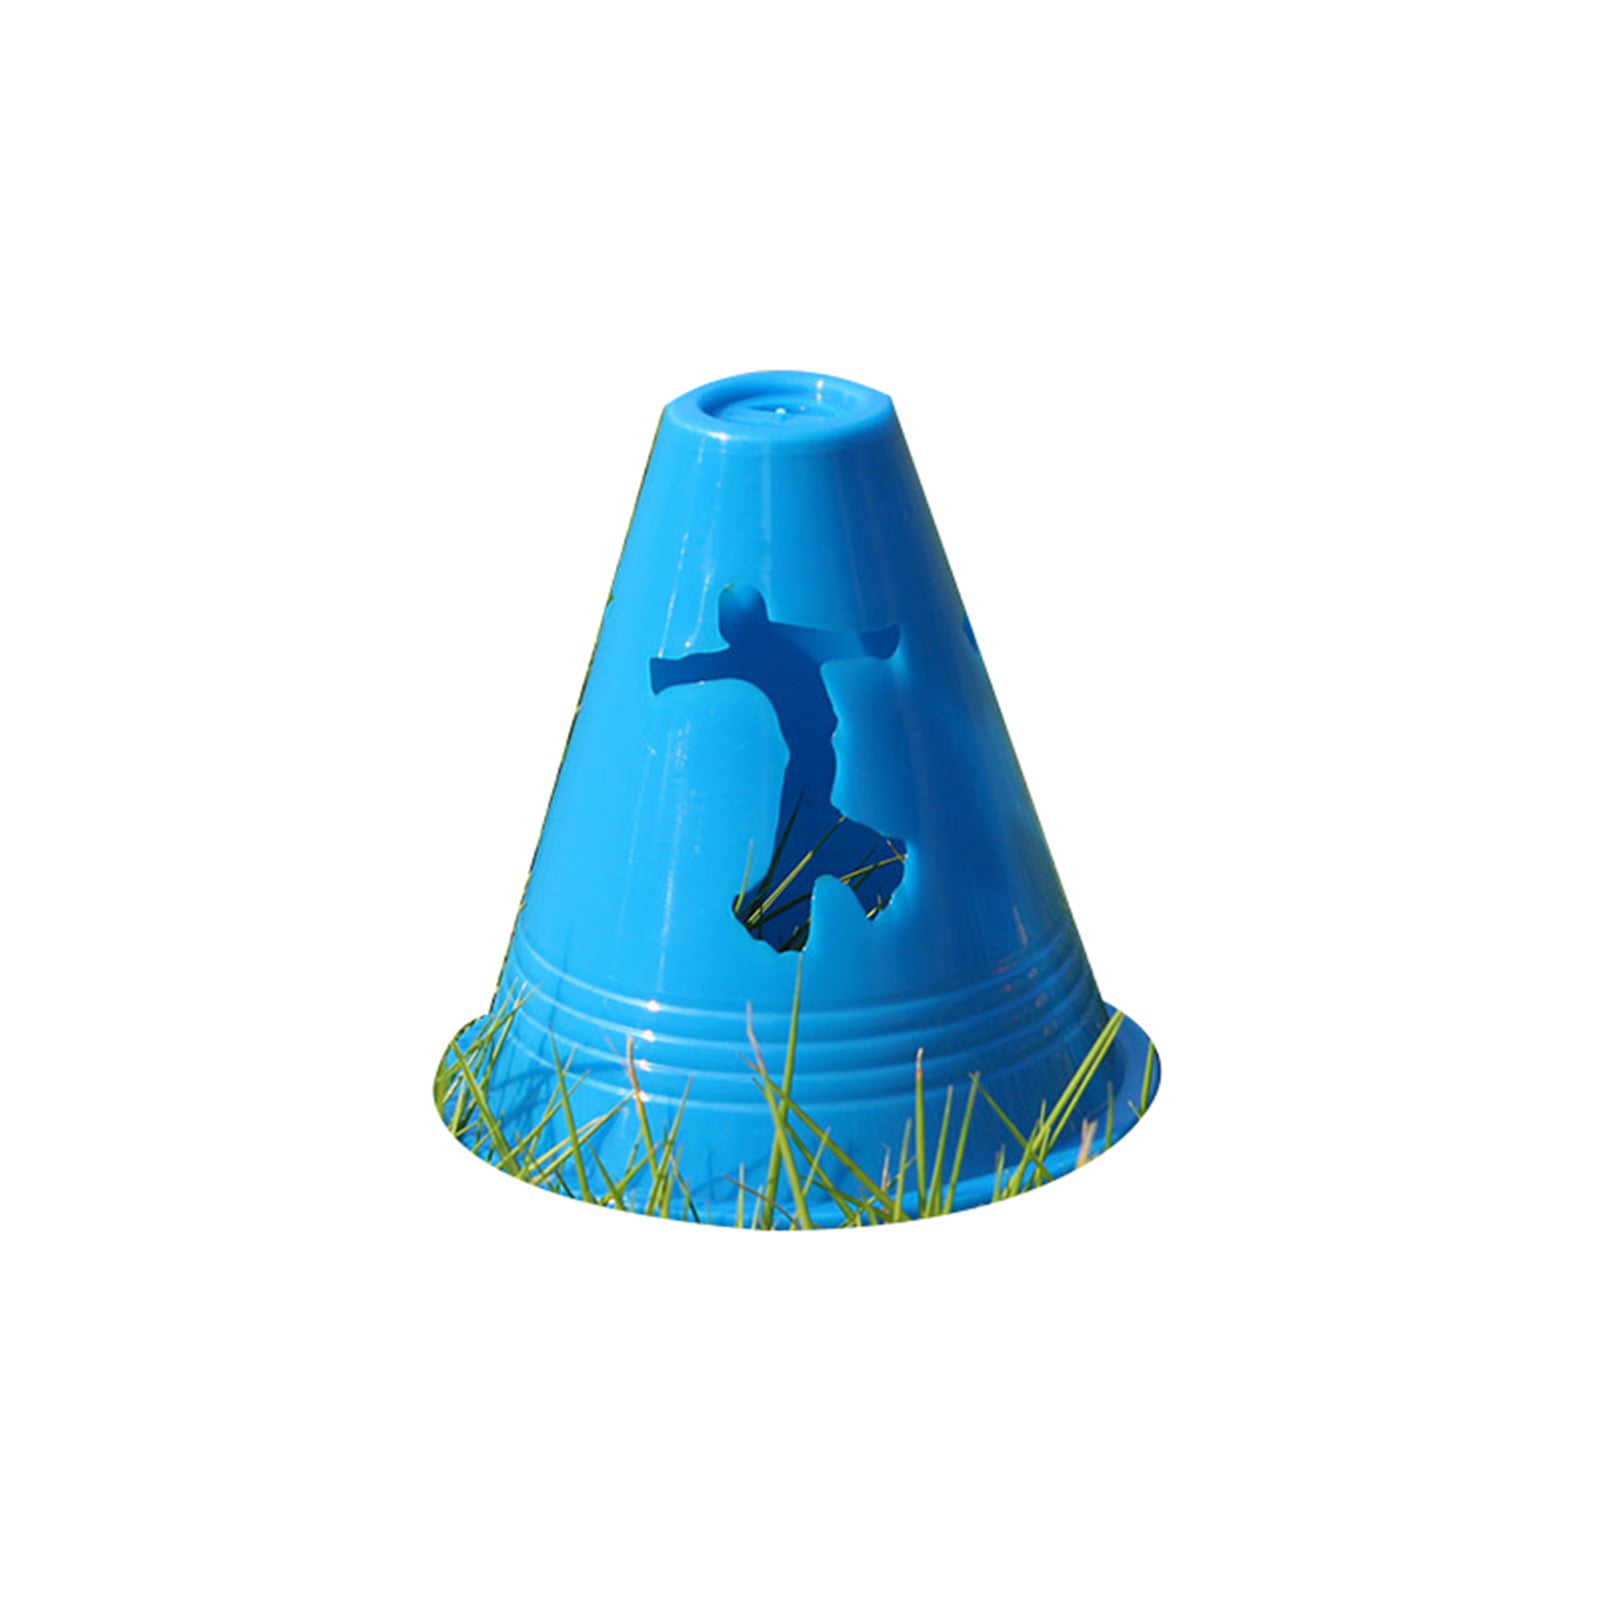 10 Pcs 8CM Roadblock Cone Durable Barricade Plastic Barrier for Soccer Training 